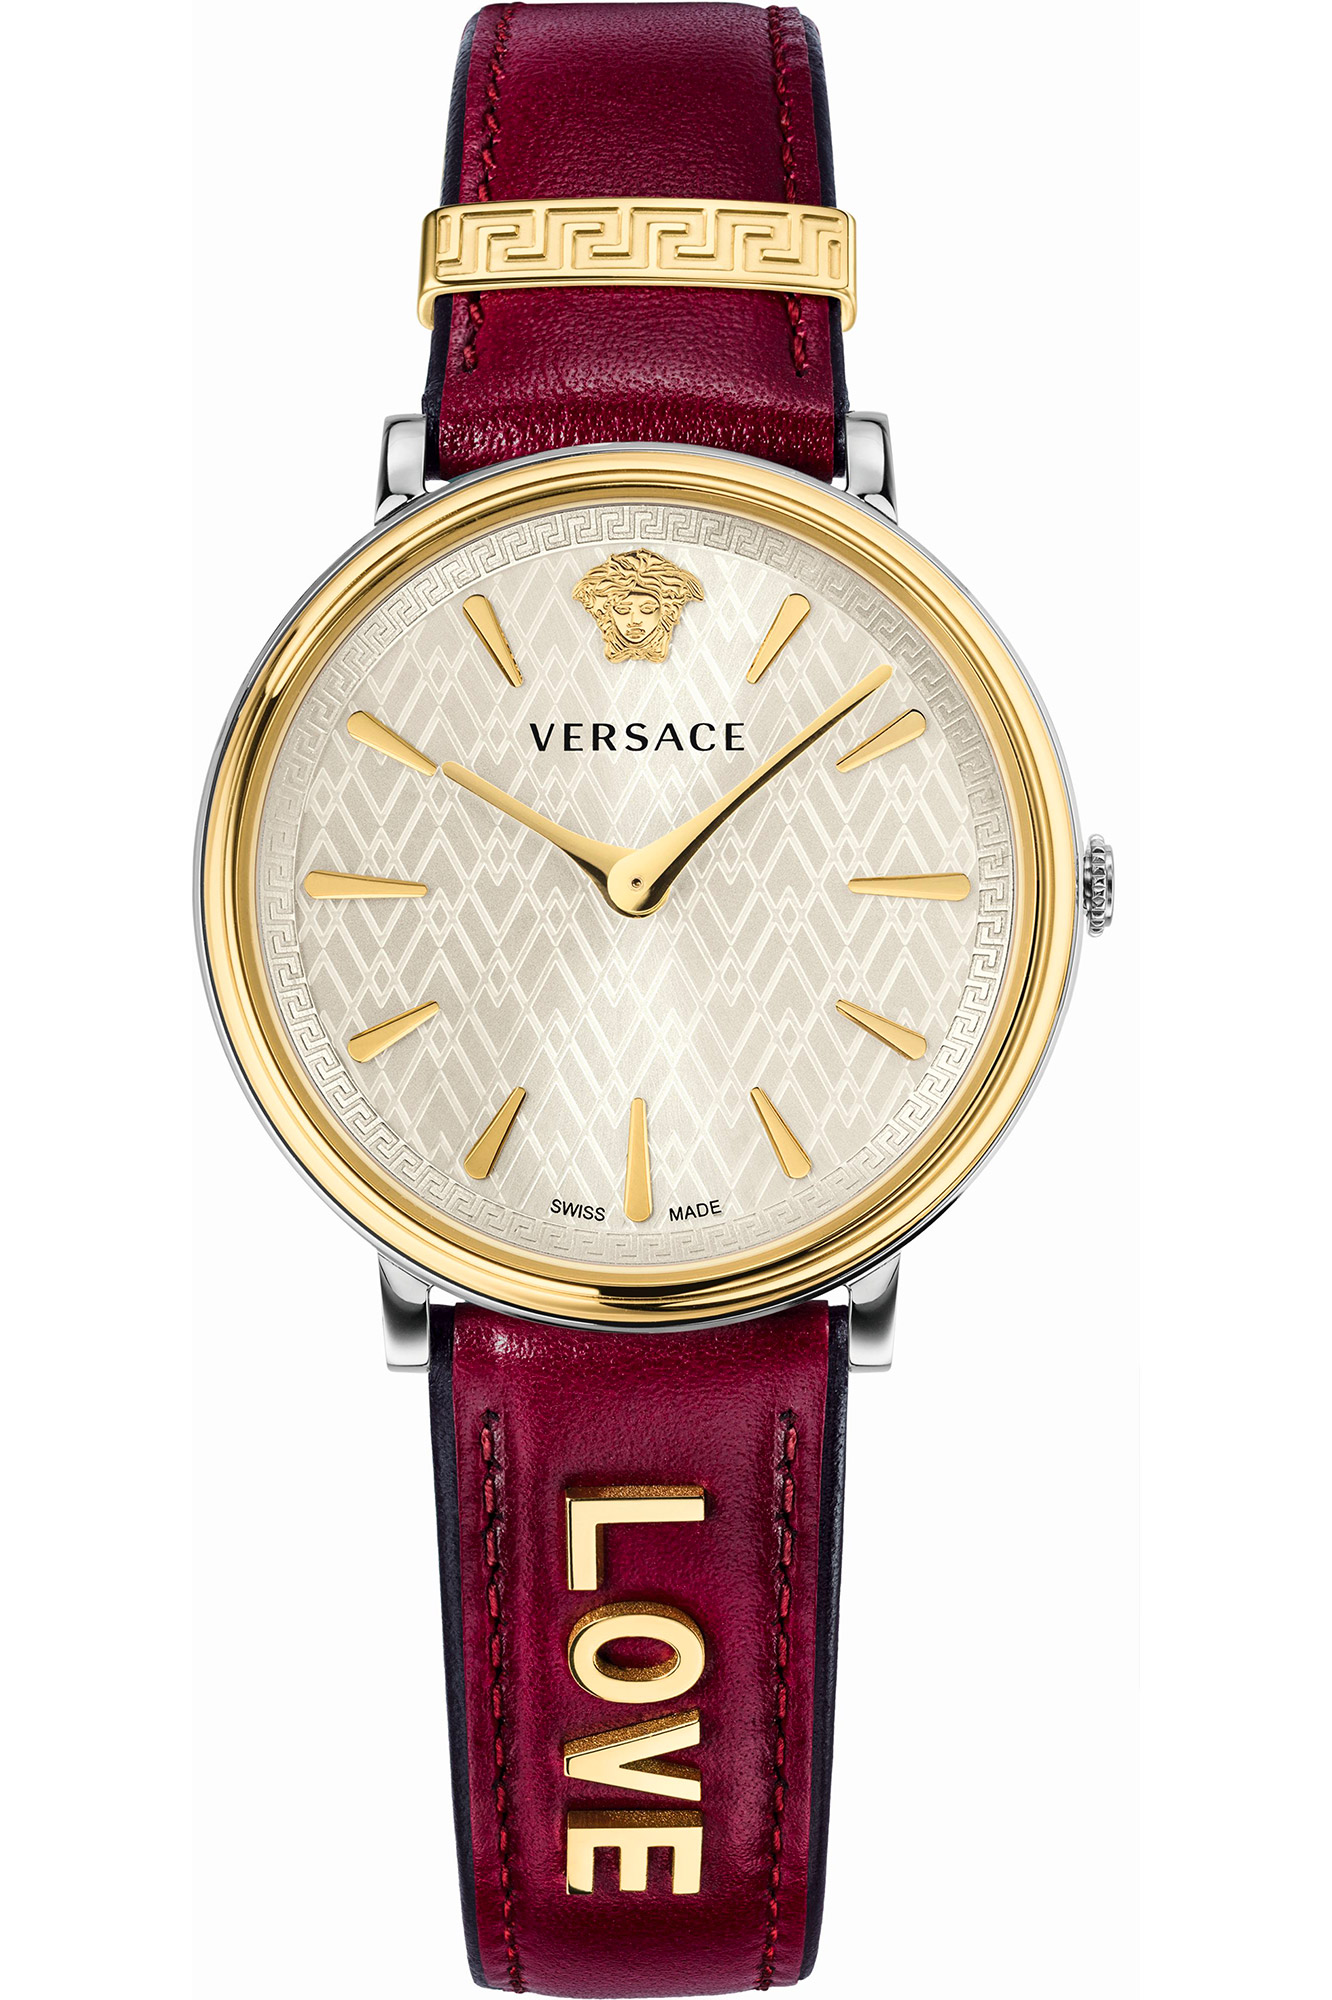 Reloj Versace vbp020017